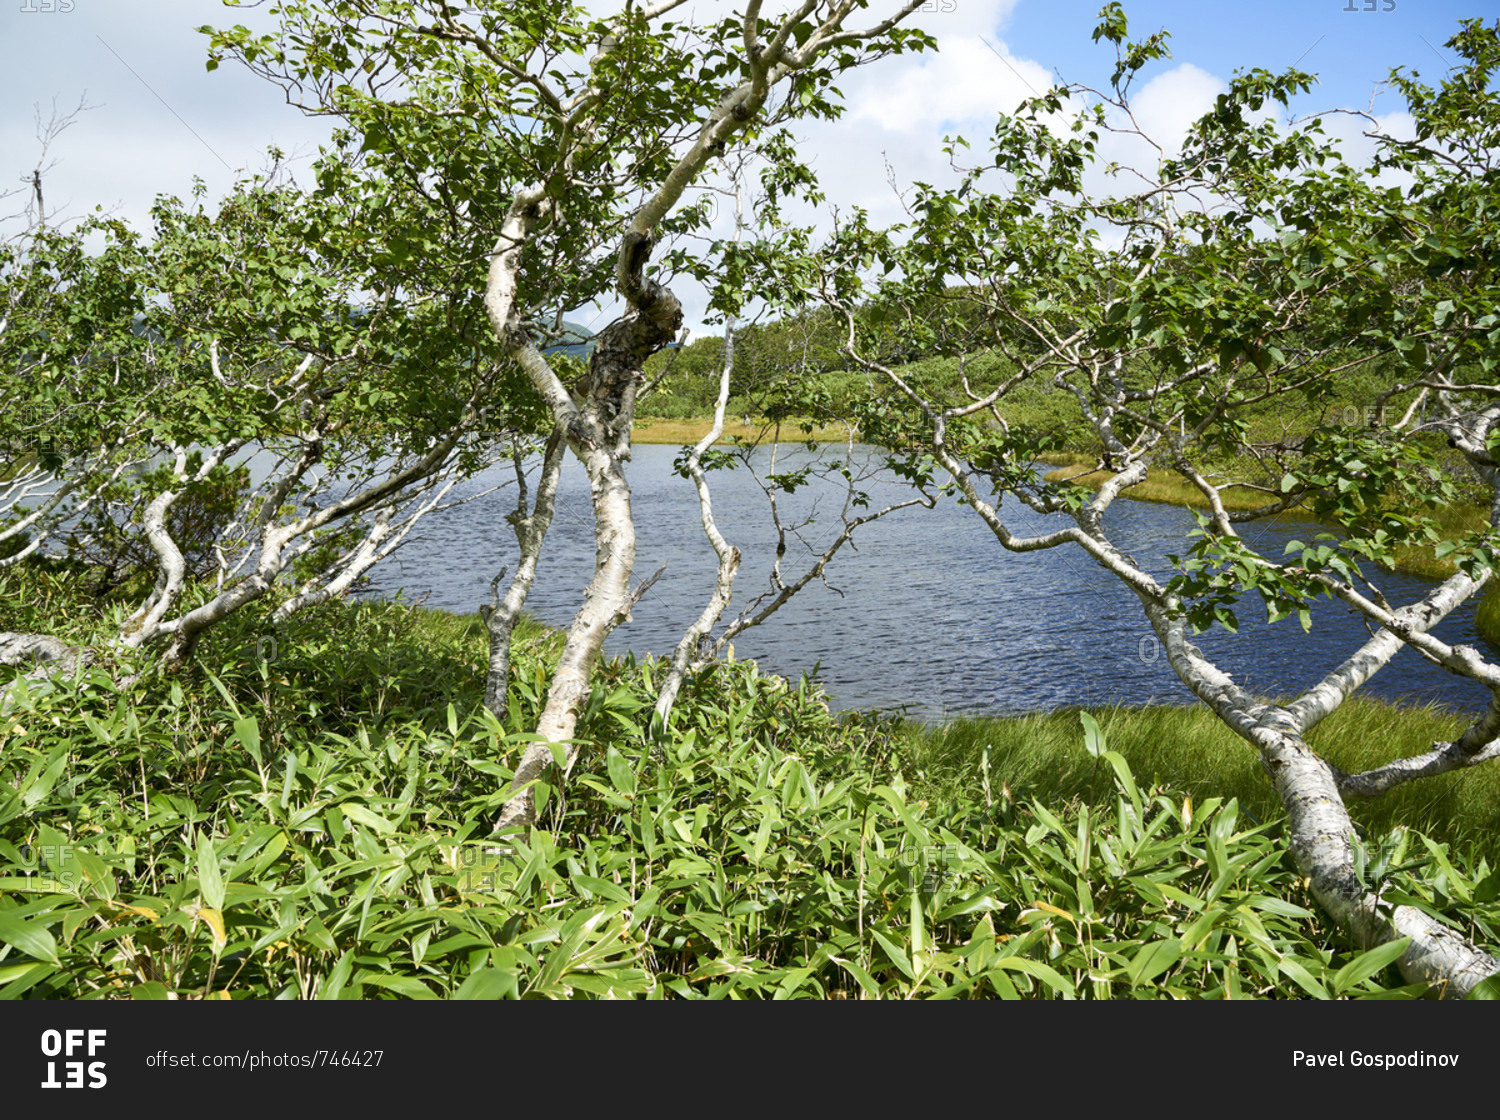 Lake Rausu area, Shiretoko National Park, Hokkaido, Japan; 2 September 2018; Trees around Lake Rausu, Shiretoko National Park In Hokkaido, Japan. Lake Rausu is a freshwater lake at 740 m above sea level in the foot of Mt. Chinishiridake, with a perimeter 